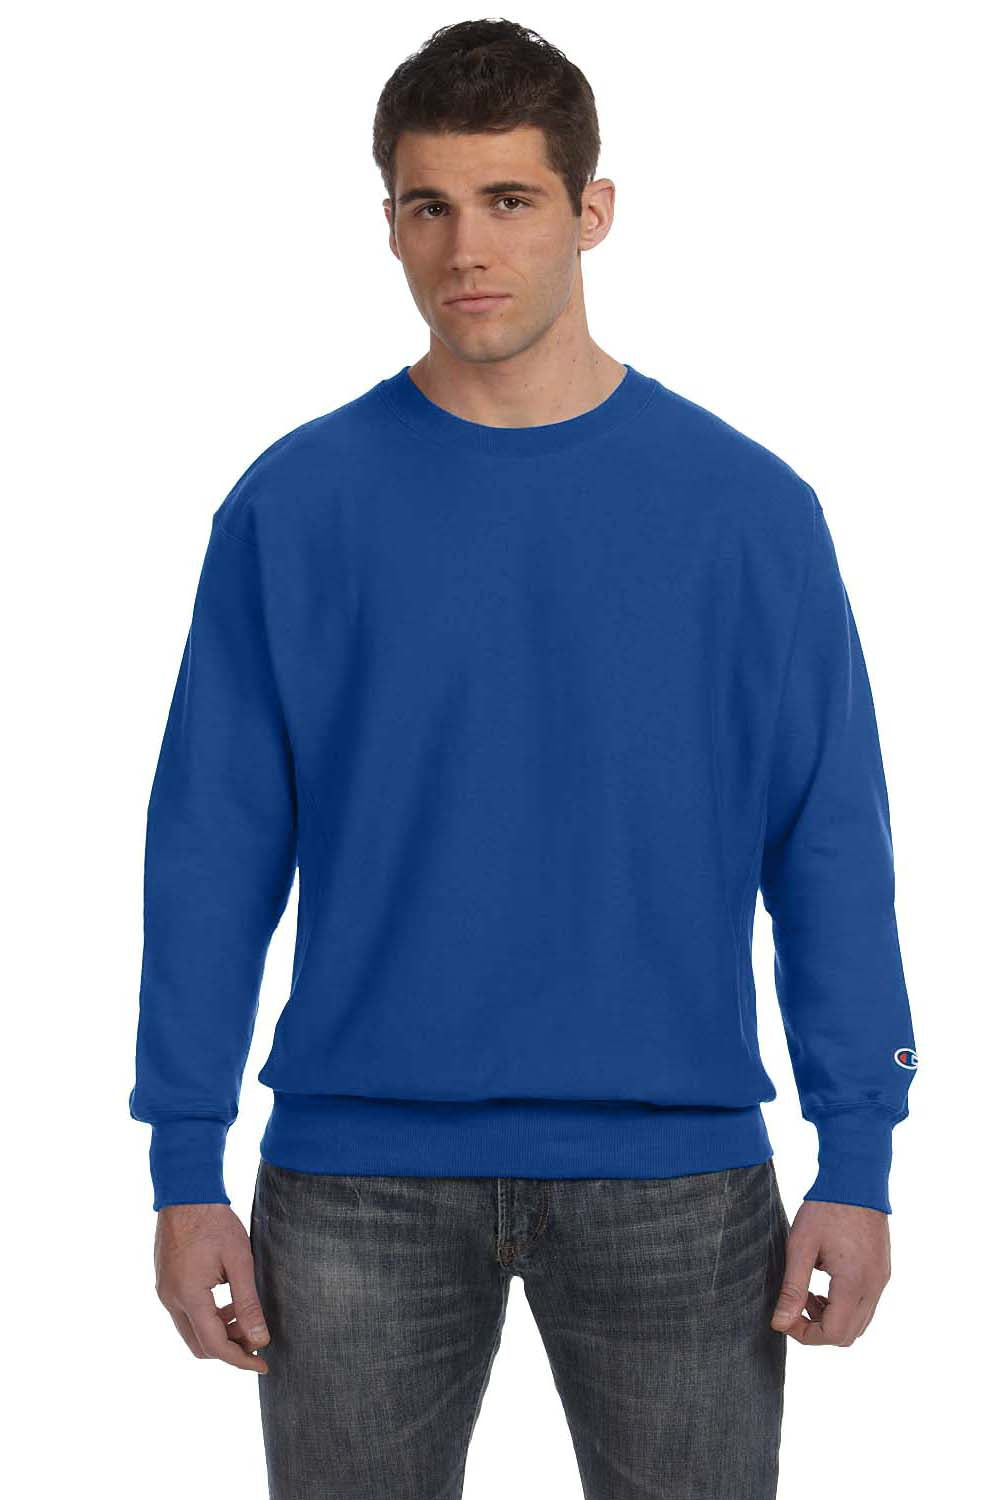 — Royal Blue Athletic S149/S1049 Mens Sweatshirt Champion Crewneck